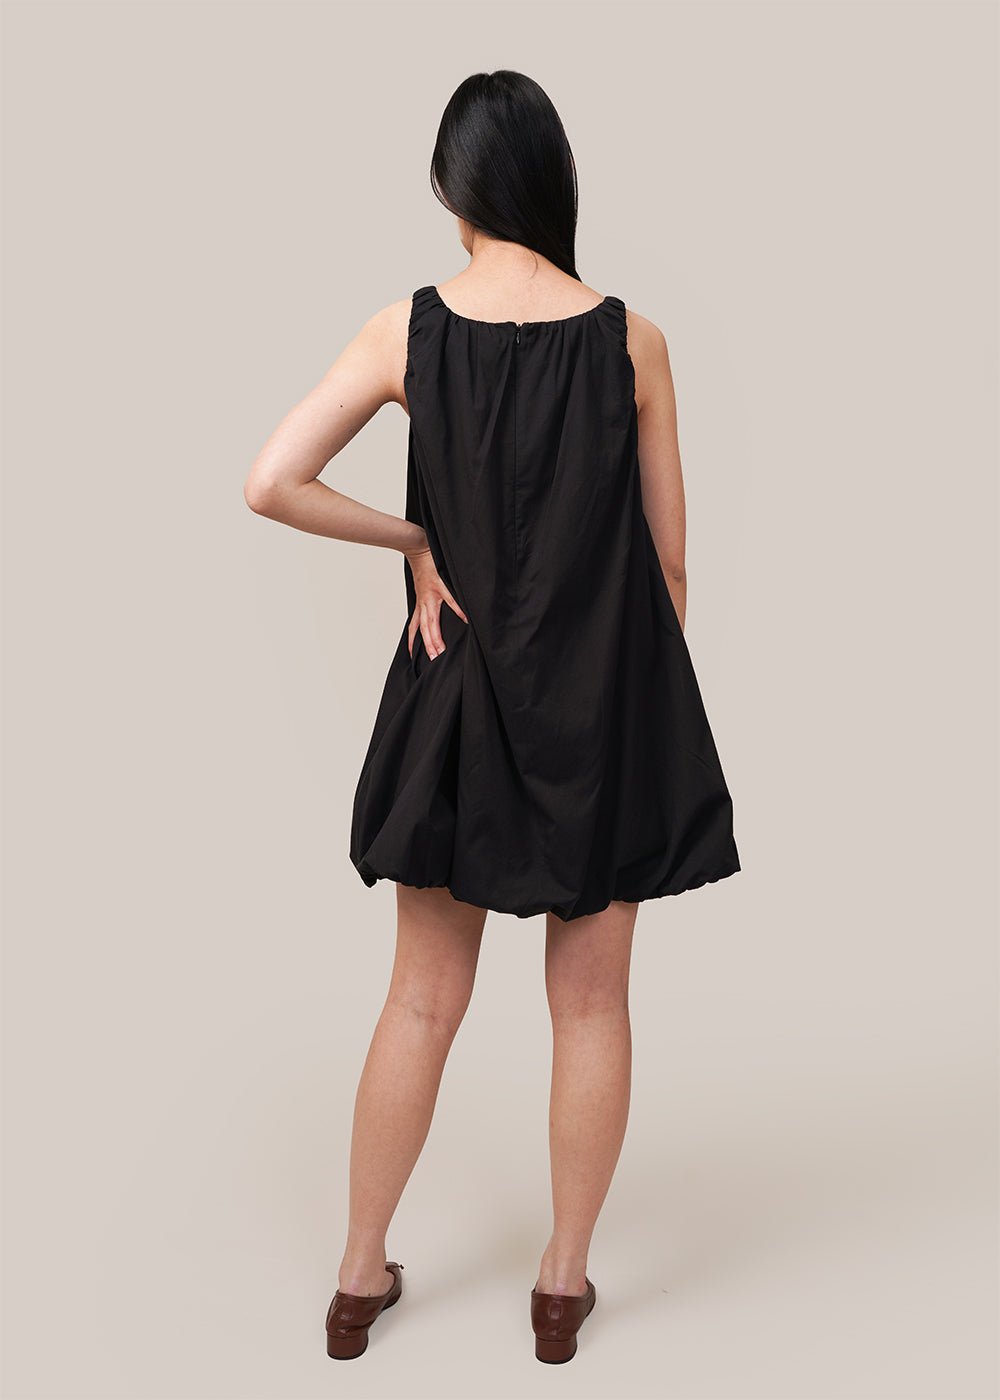 AMOMENTO Black Sheer Volume Mini Dress - New Classics Studios Sustainable Ethical Fashion Canada